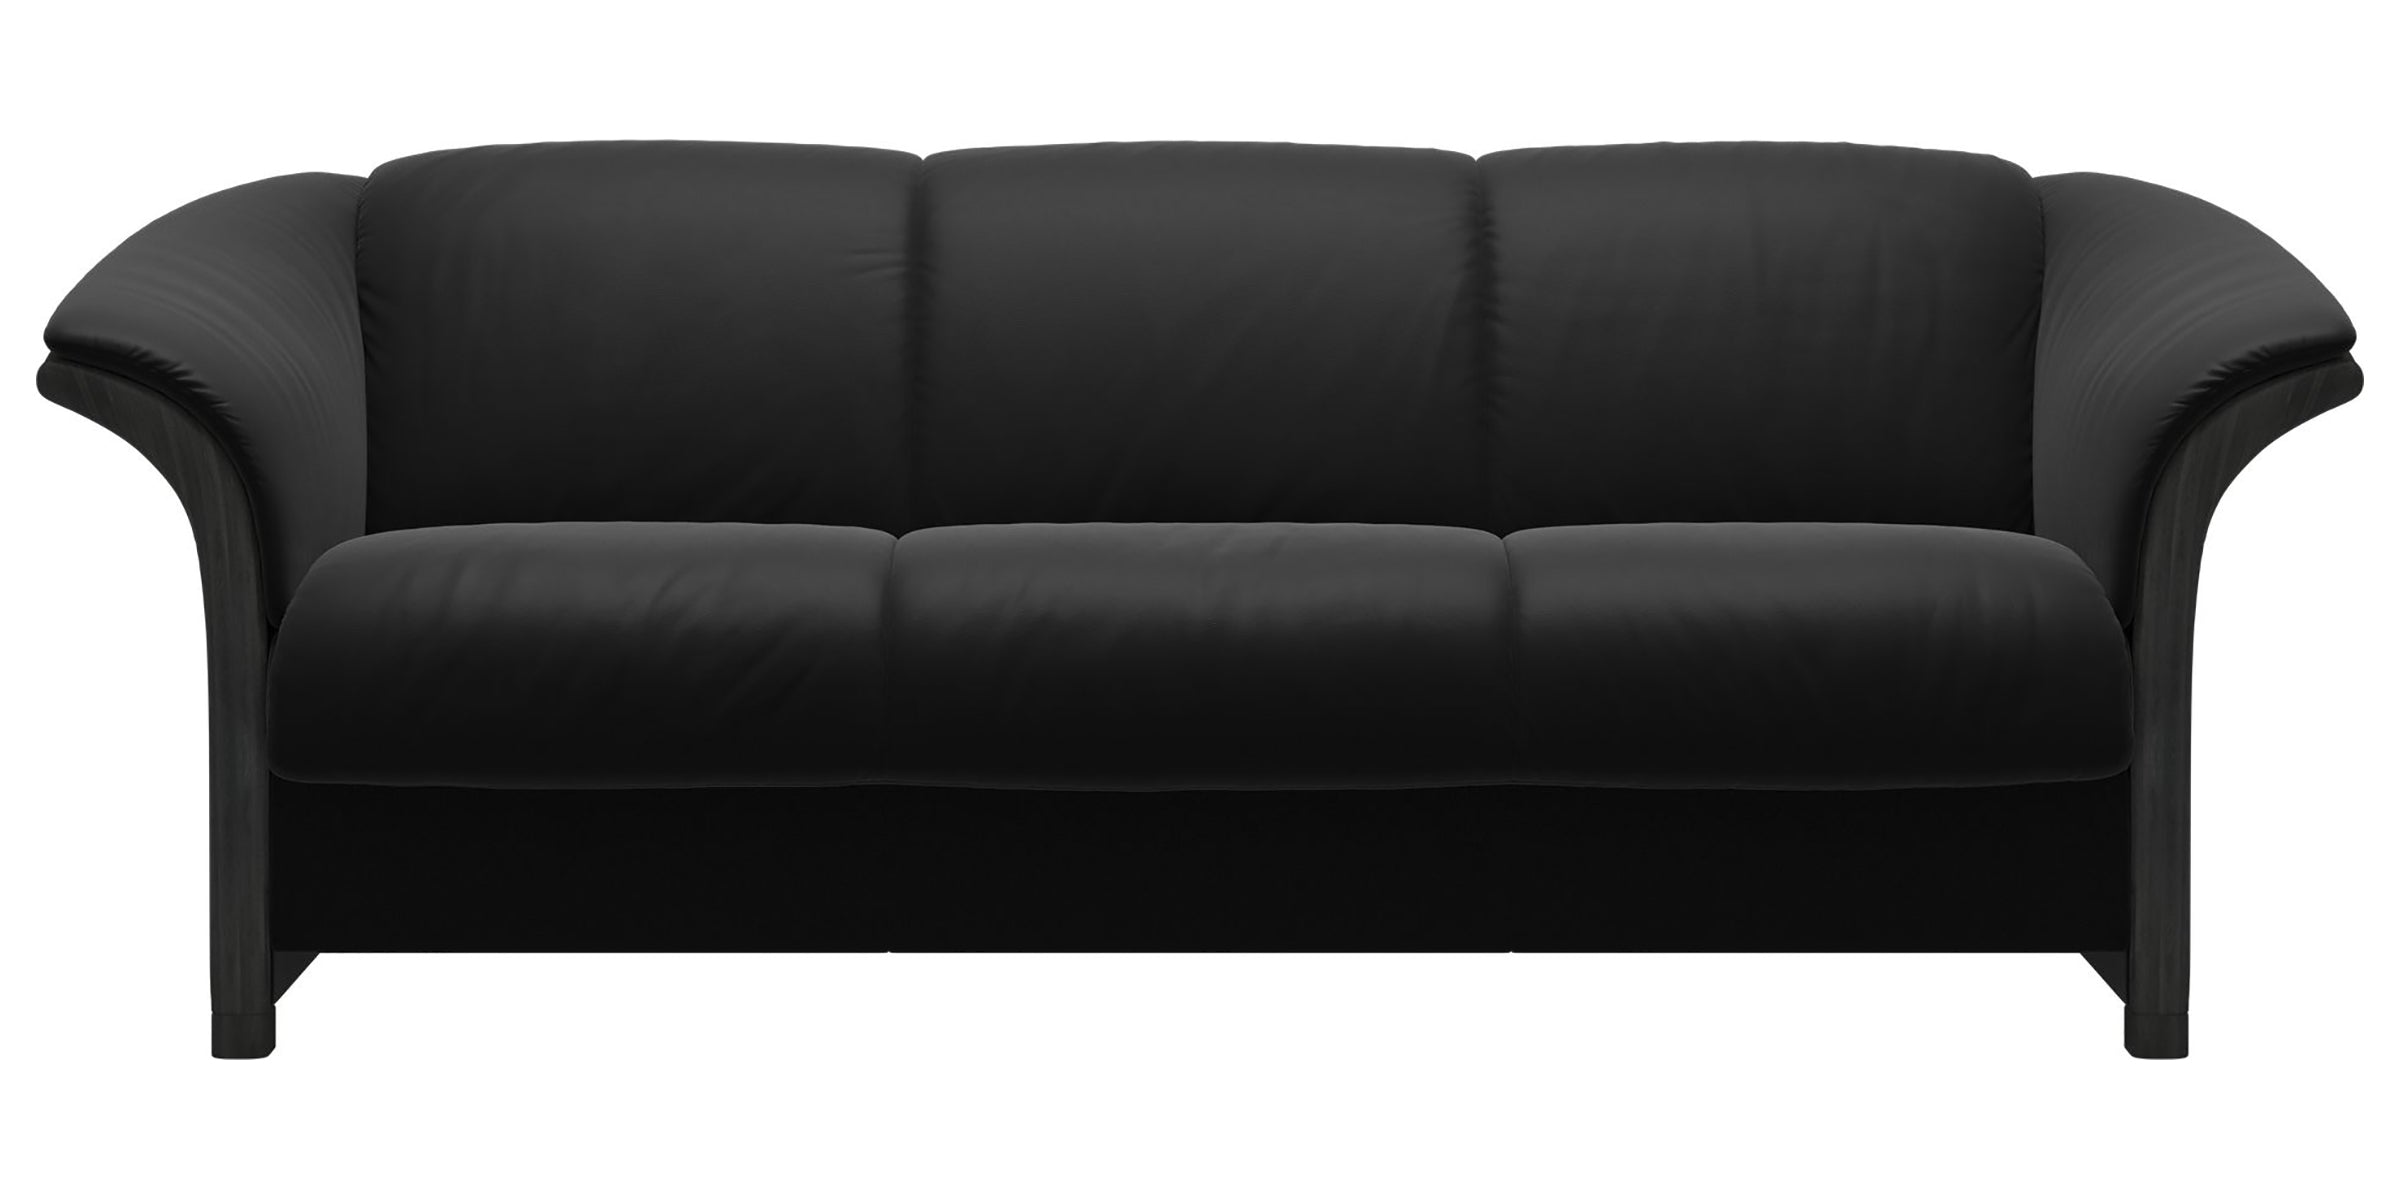 Paloma Leather Black and Grey Arm Trim | Stressless Manhattan Sofa | Valley Ridge Furniture